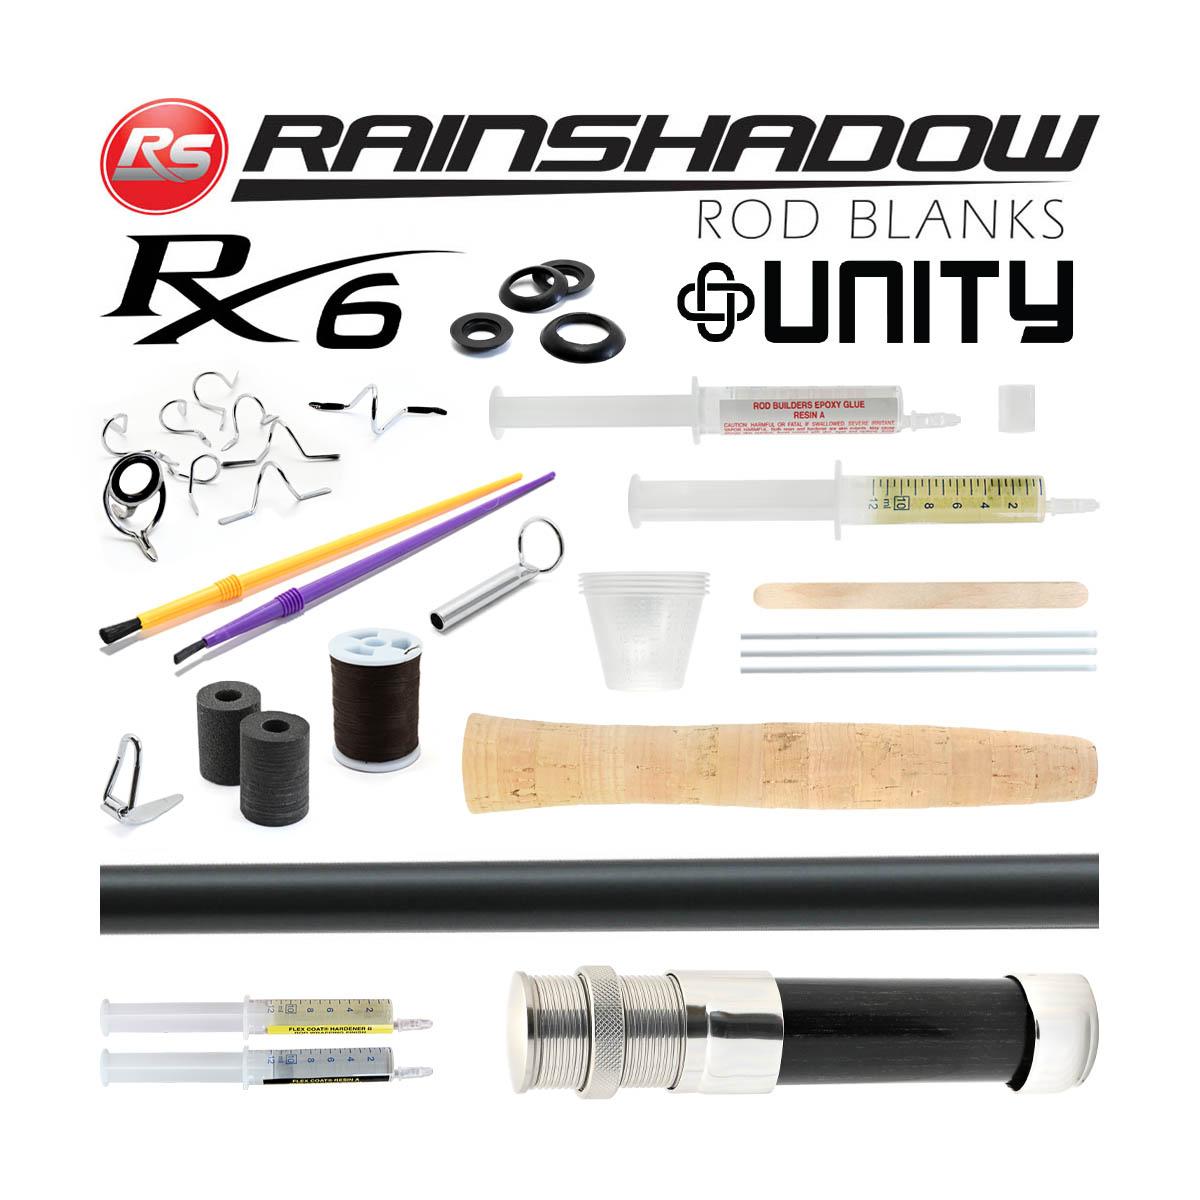 Rainshadow Unity RX6 Fly Rod Building Kits